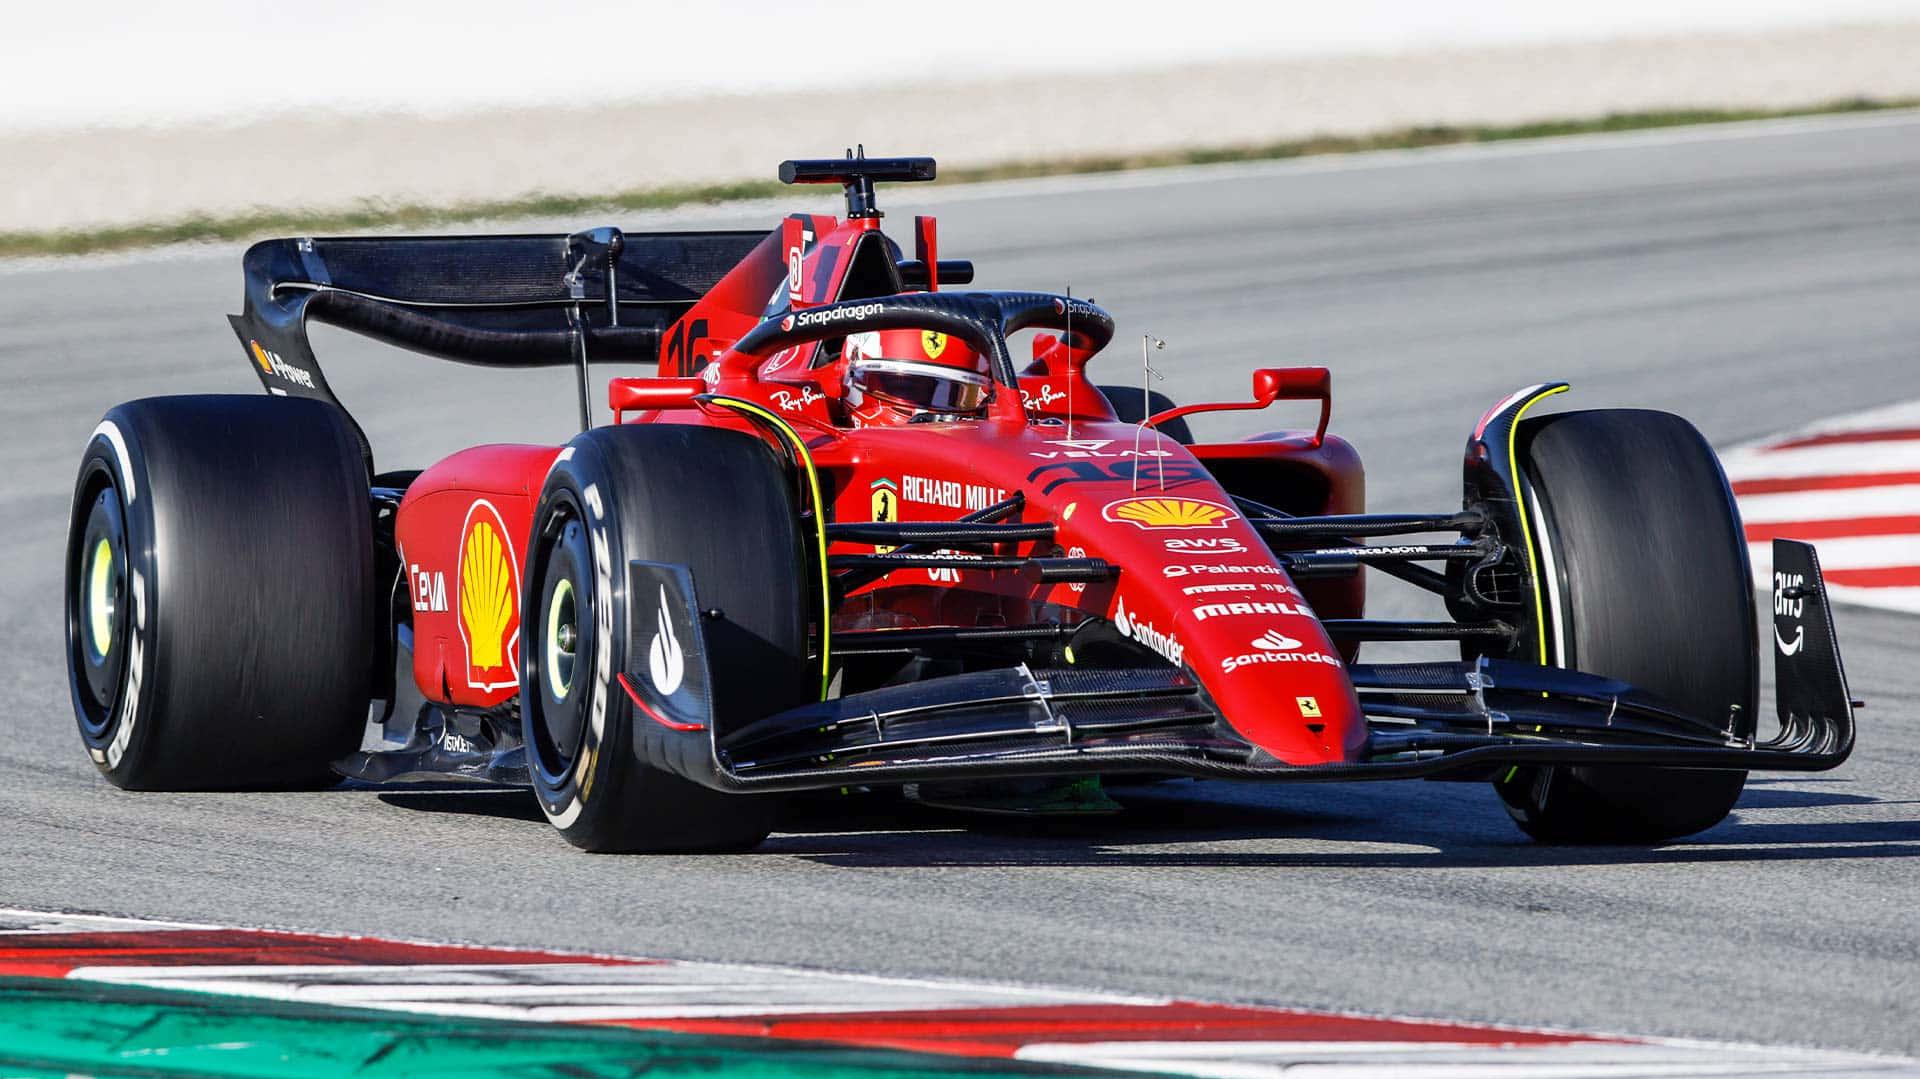 Ferrari F1 Car Driving On A Track Wallpaper